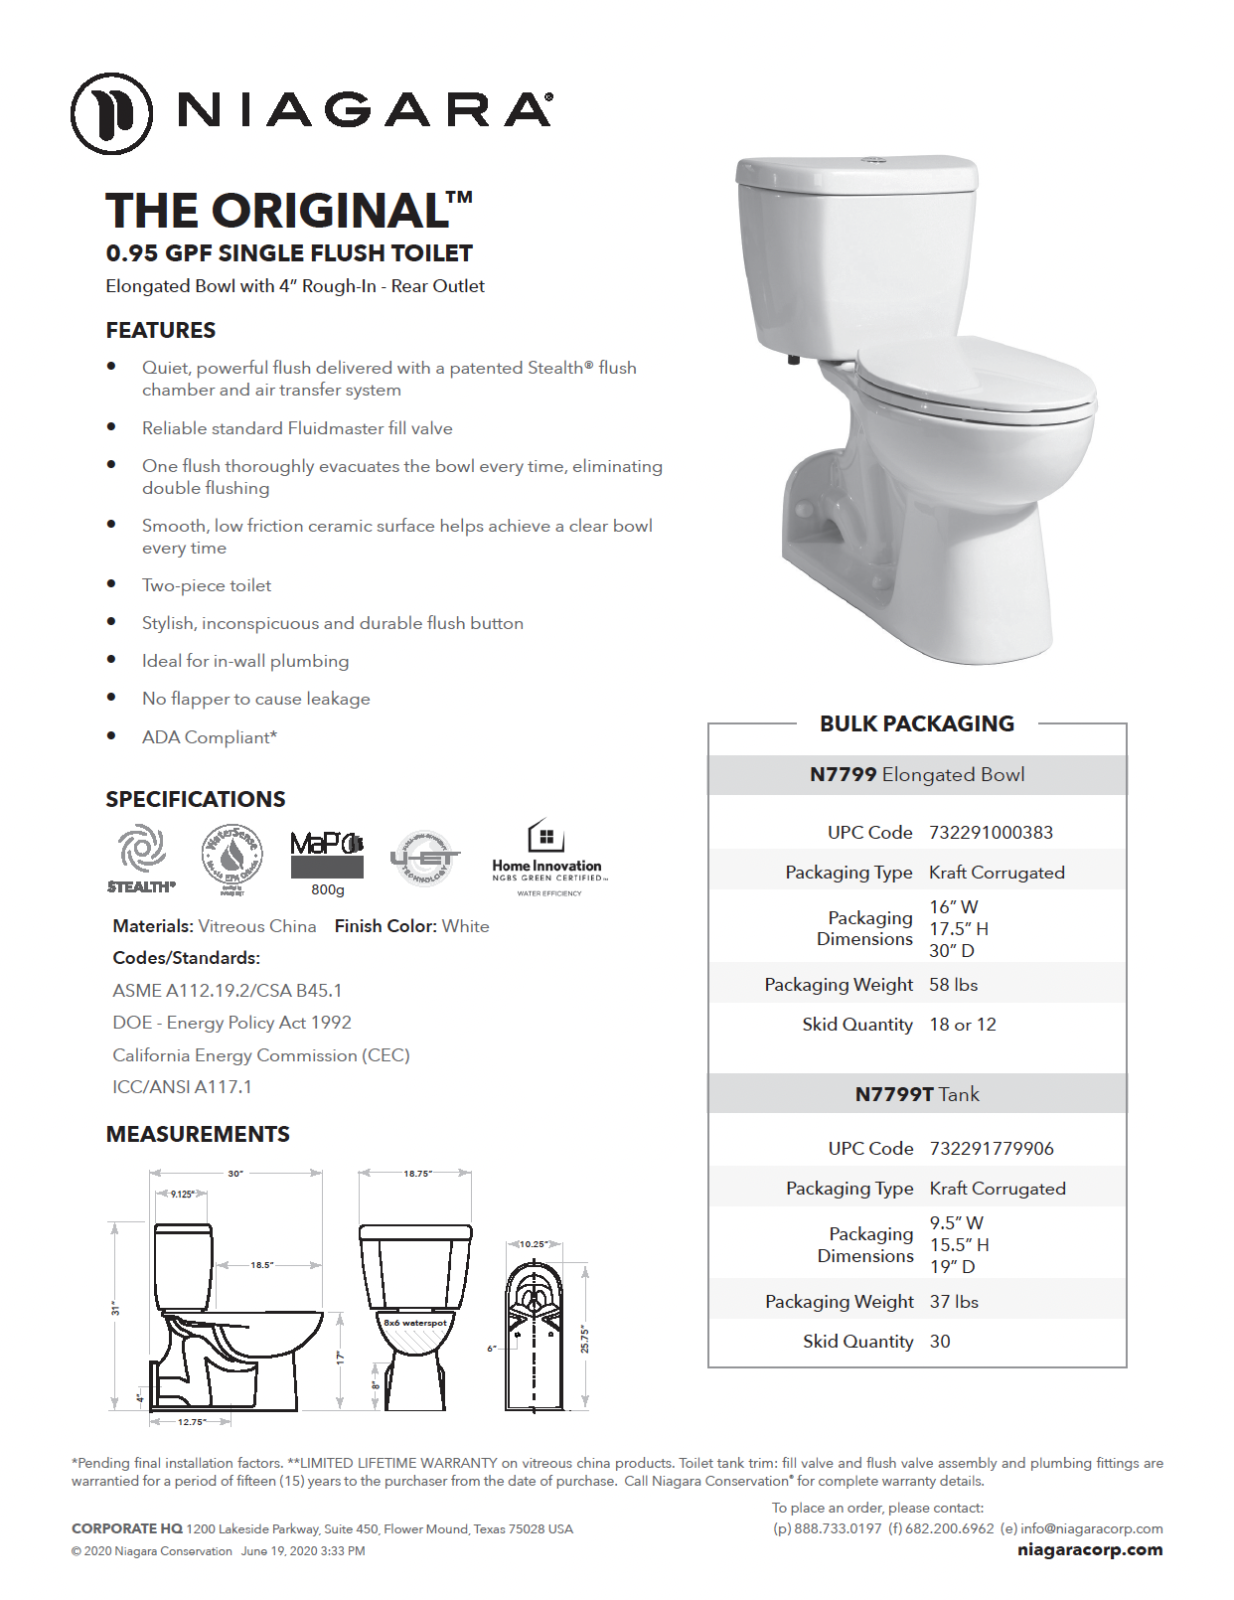 THE ORIGINAL<sup>™</sup> 0.95 GPF Single Flush 4” Elongated Toilet